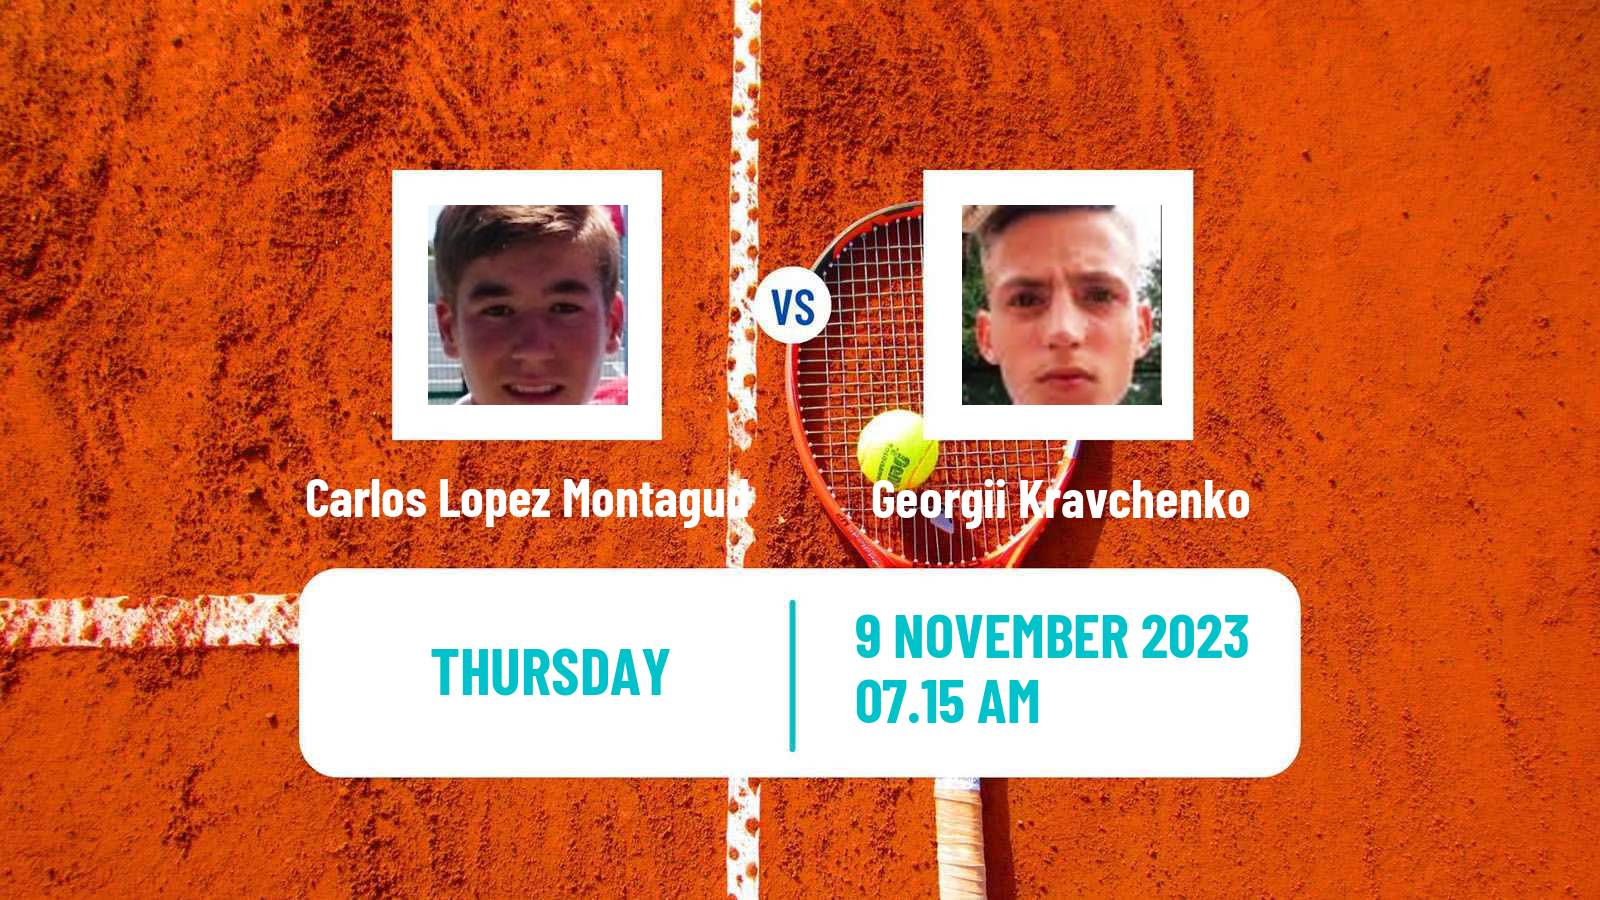 Tennis ITF M25 Benicarlo Men Carlos Lopez Montagud - Georgii Kravchenko